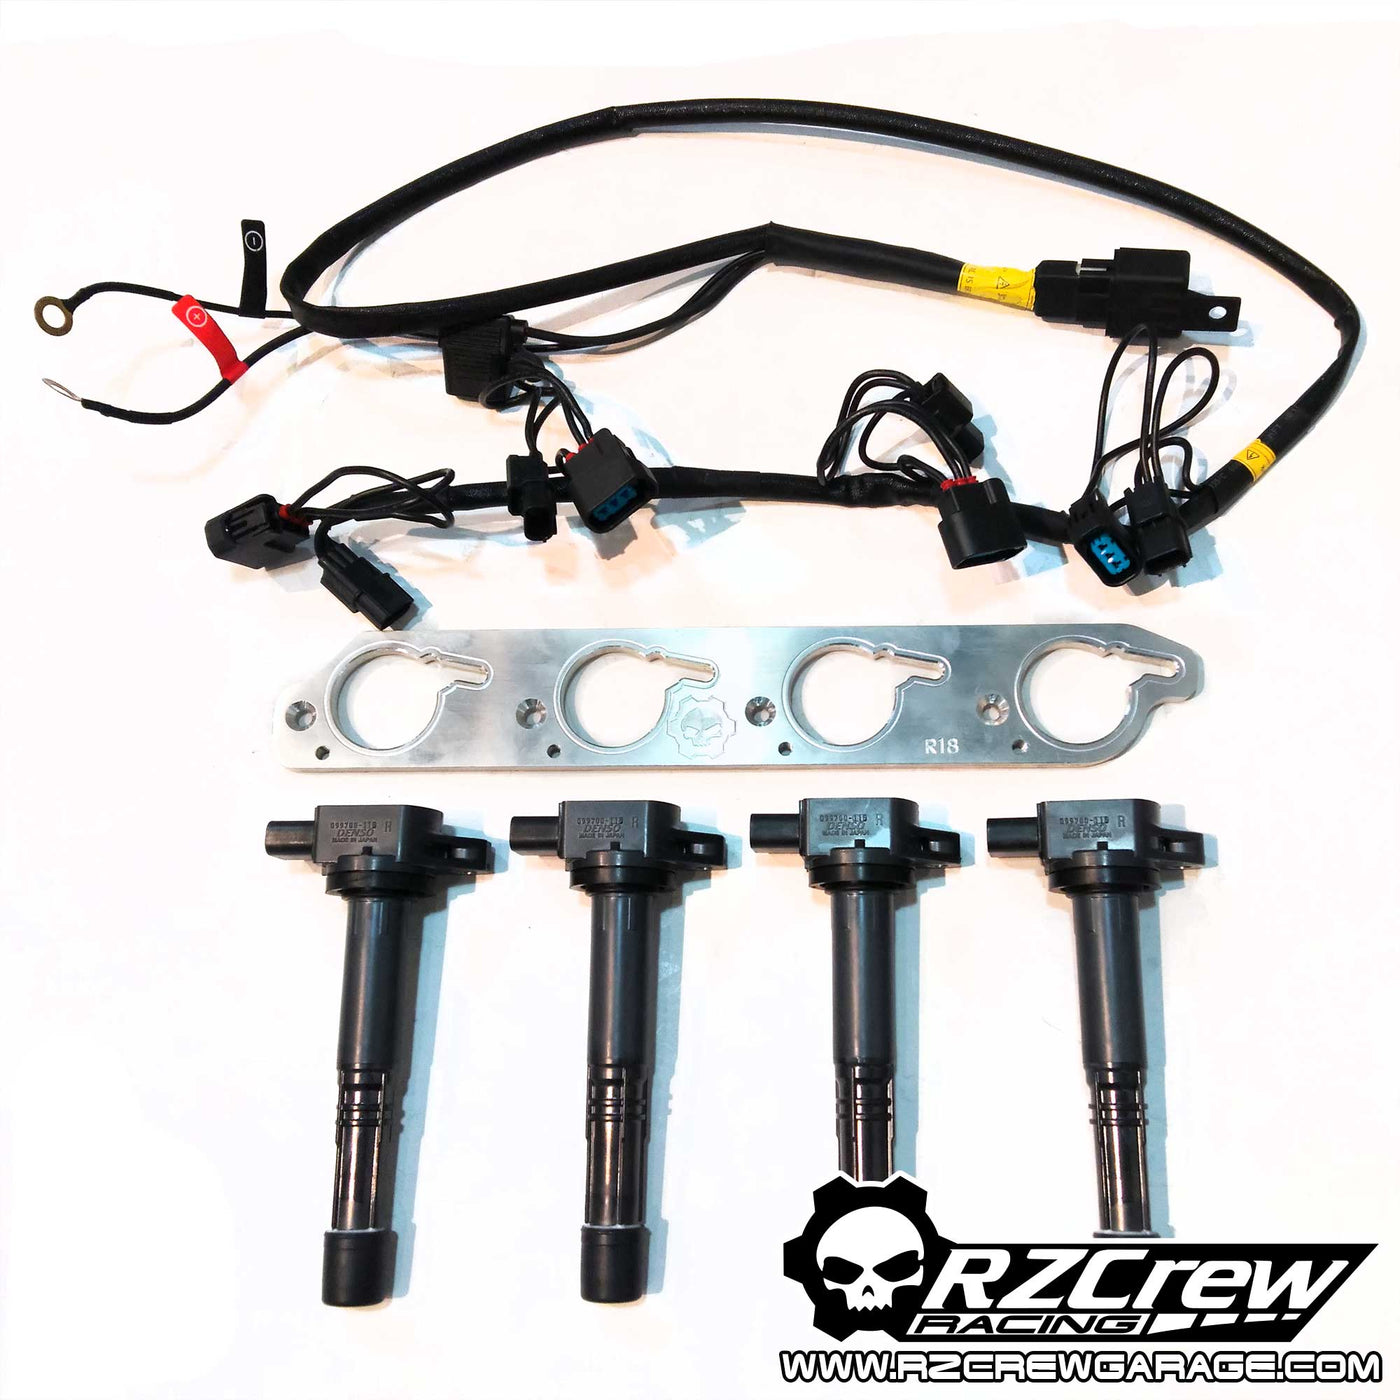 Motorsport products- Kit de pince & bobine de câble en inox - Noir-  38500233-76020 – Kustom Store Motorcycles